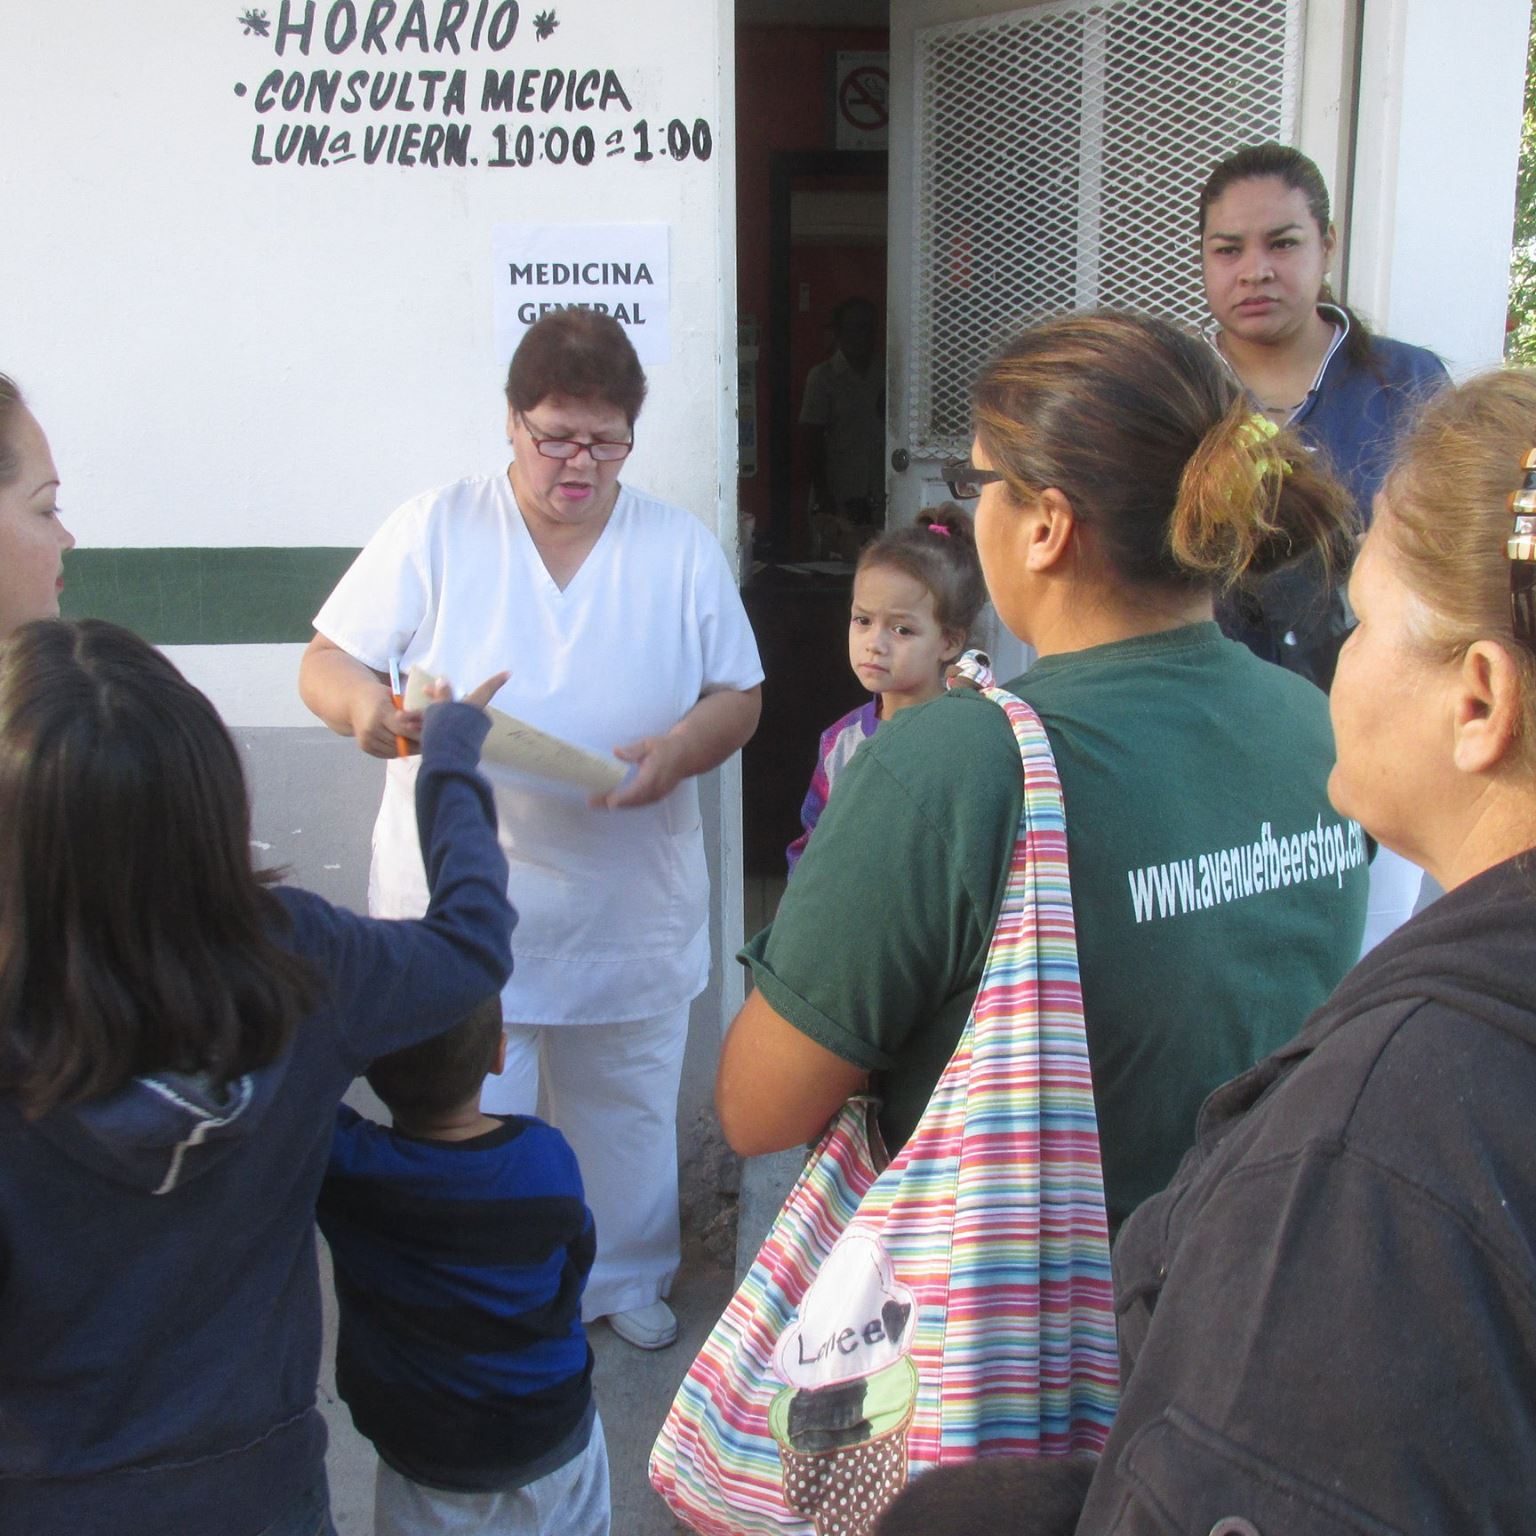 Staff preparing to receive patients.